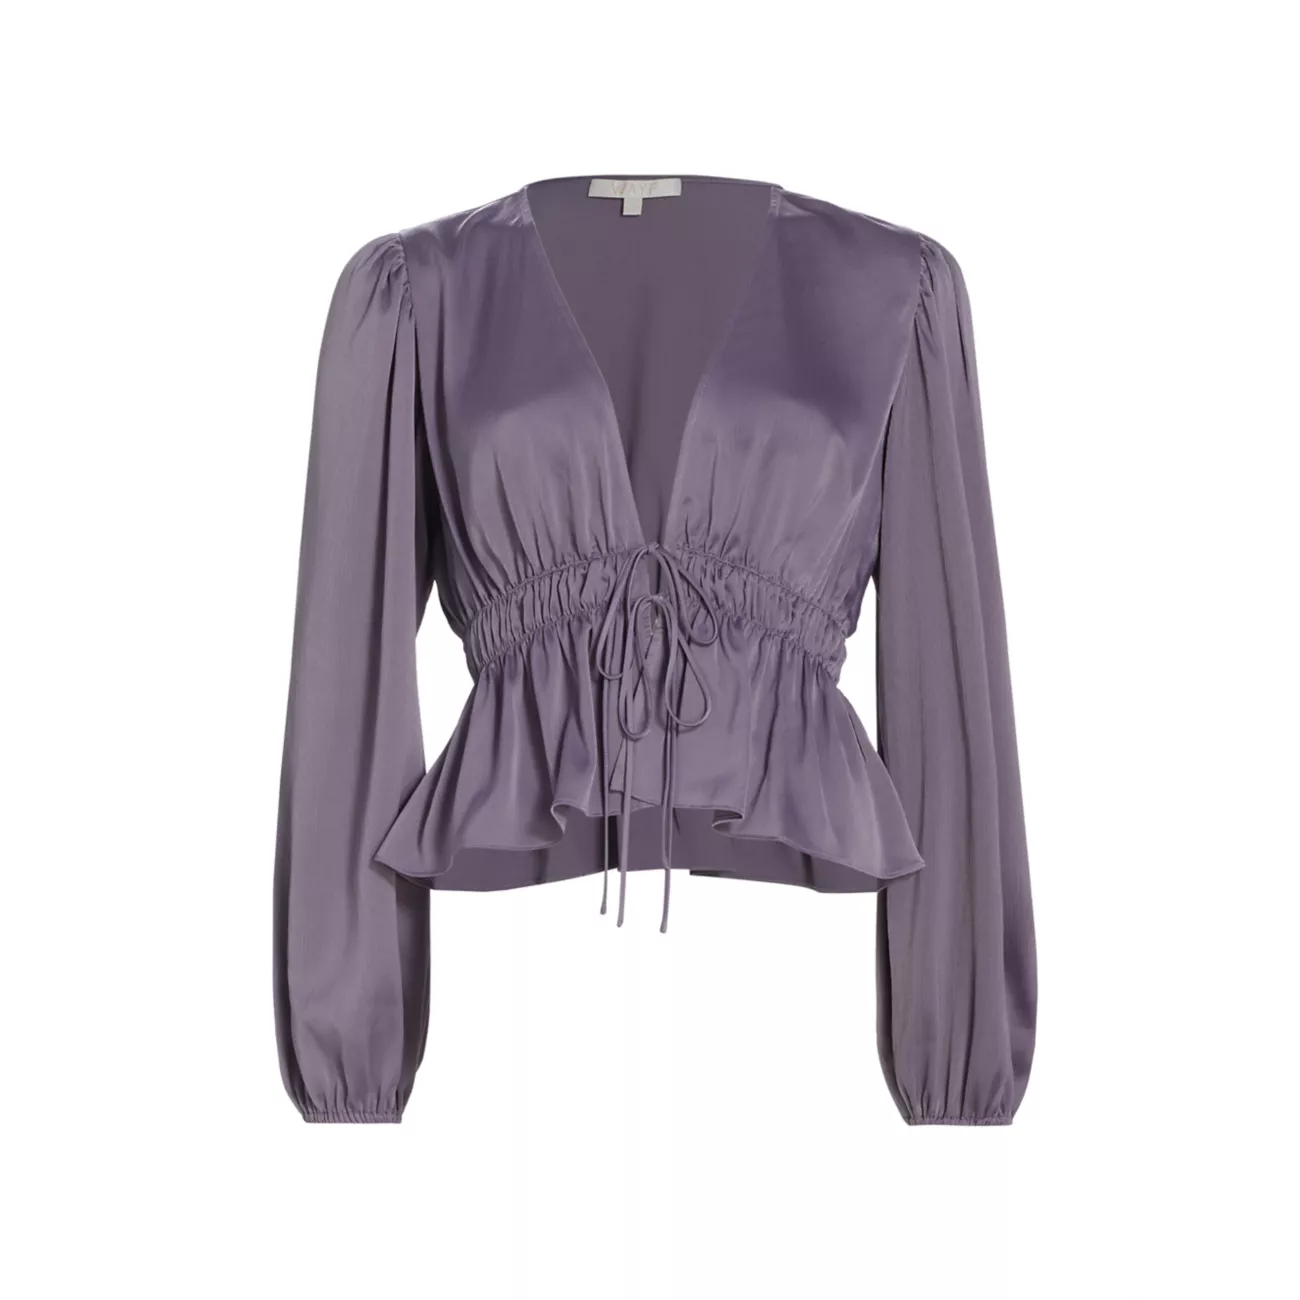 Атласная блузка Kara с завязками спереди WAYF